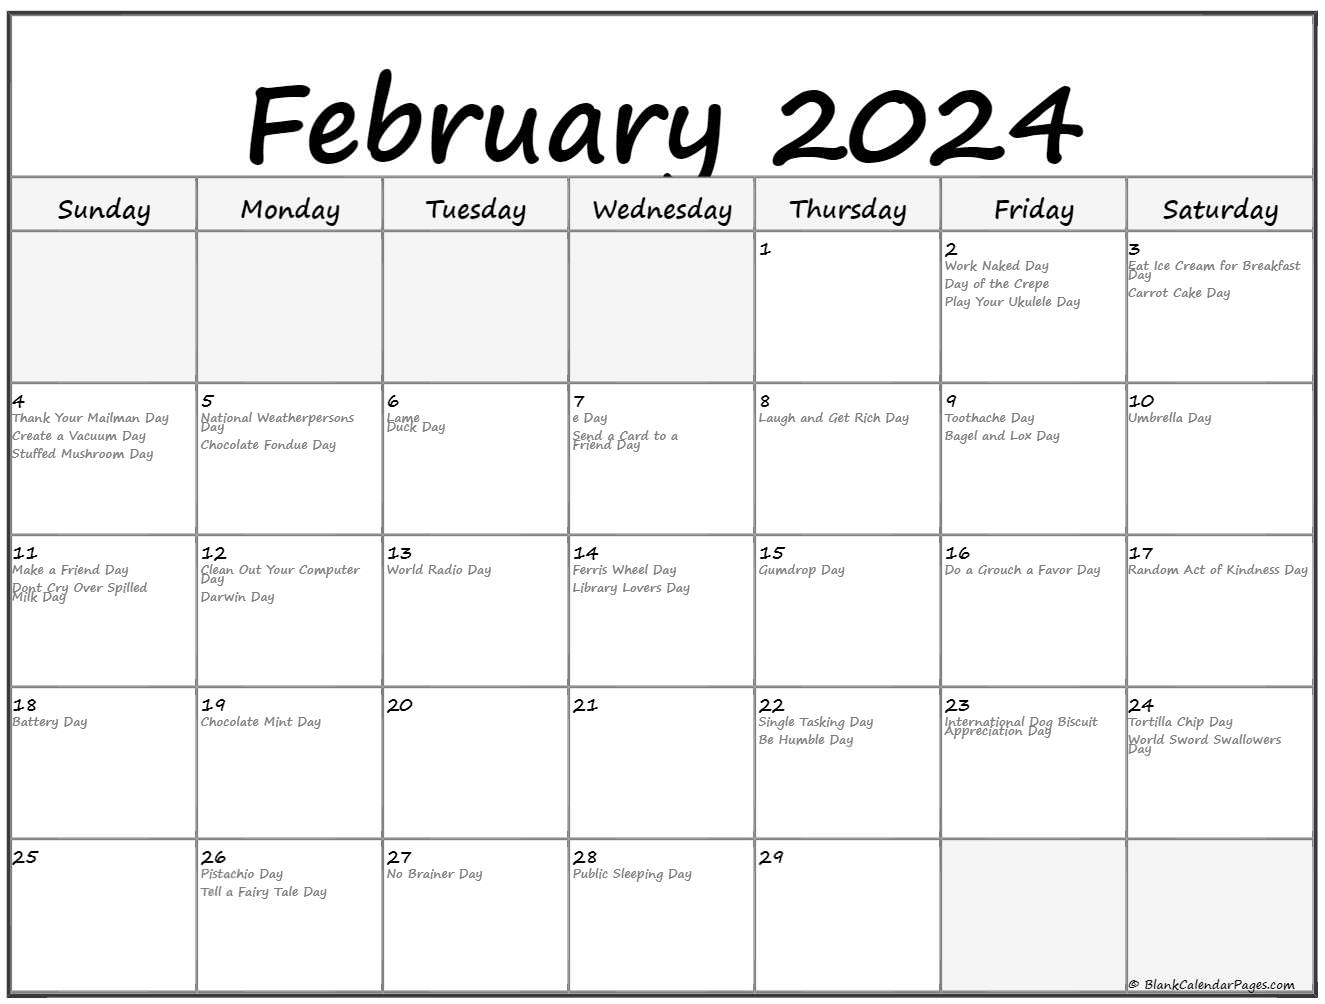 February National Days 2024 Dulci Glennie